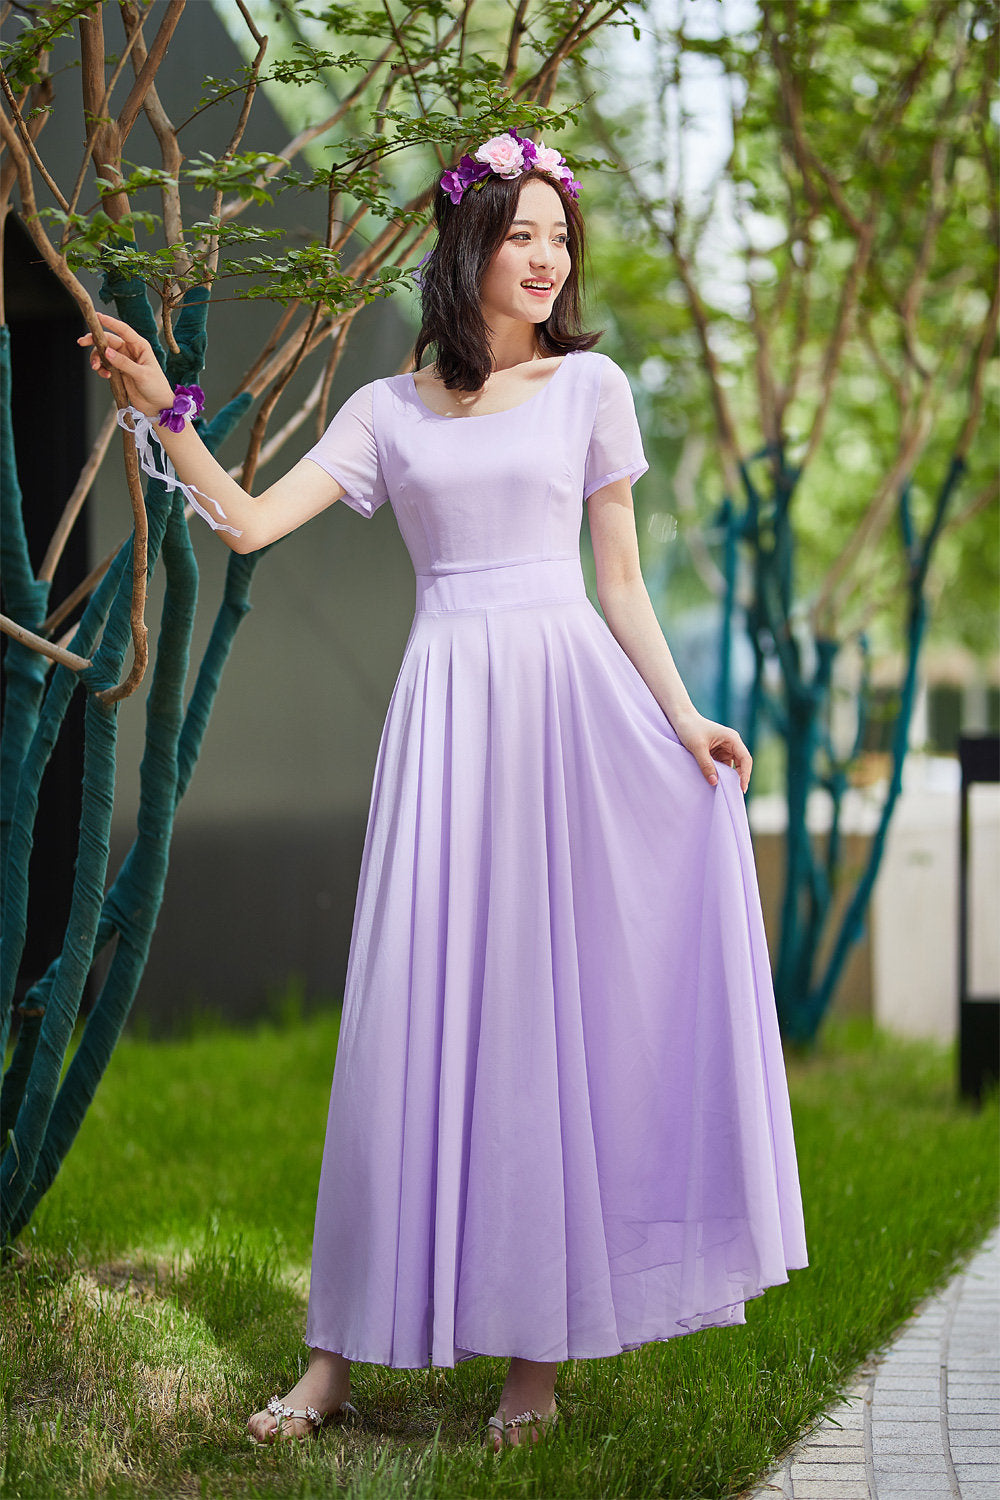 purple chiffon maxi dress, prom wedding dress 2179